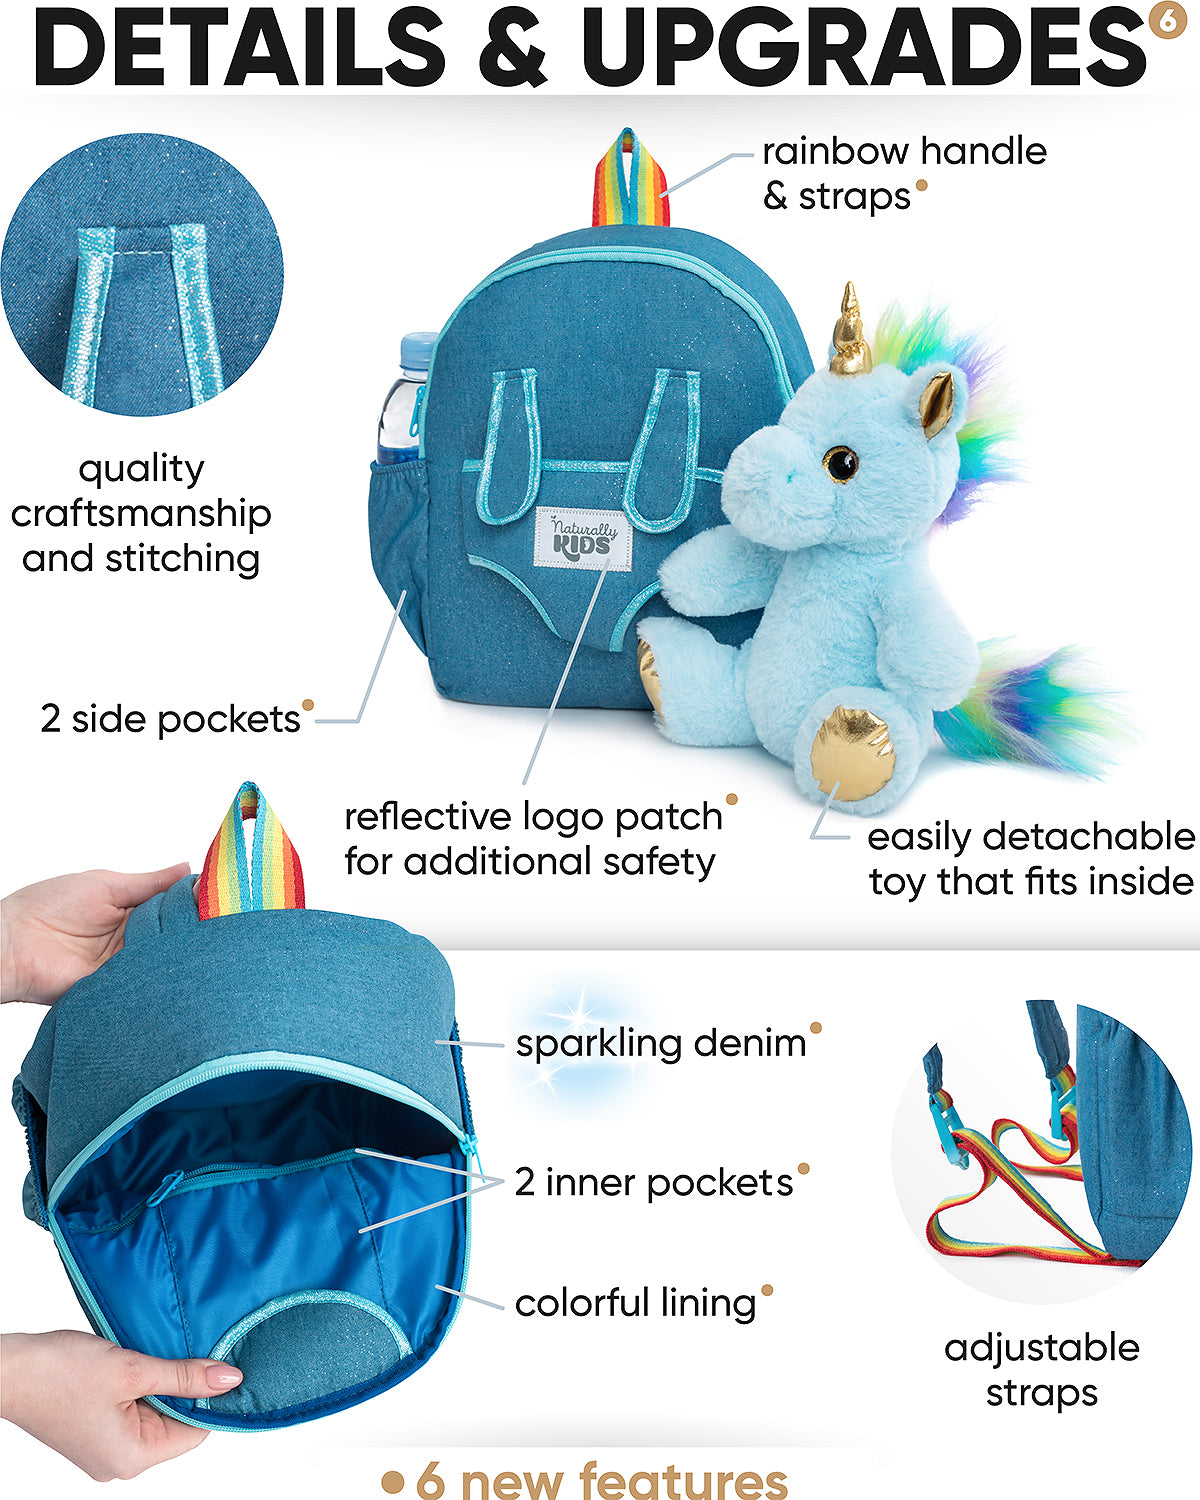 🦄 Unicorn Toys on a Unicorn Backpack — unicorn gifts for Christmas 🎅🏽 –  🦖 Naturally KIDS backpacks with plush dinosaur toys & unicorn gifts 🦄